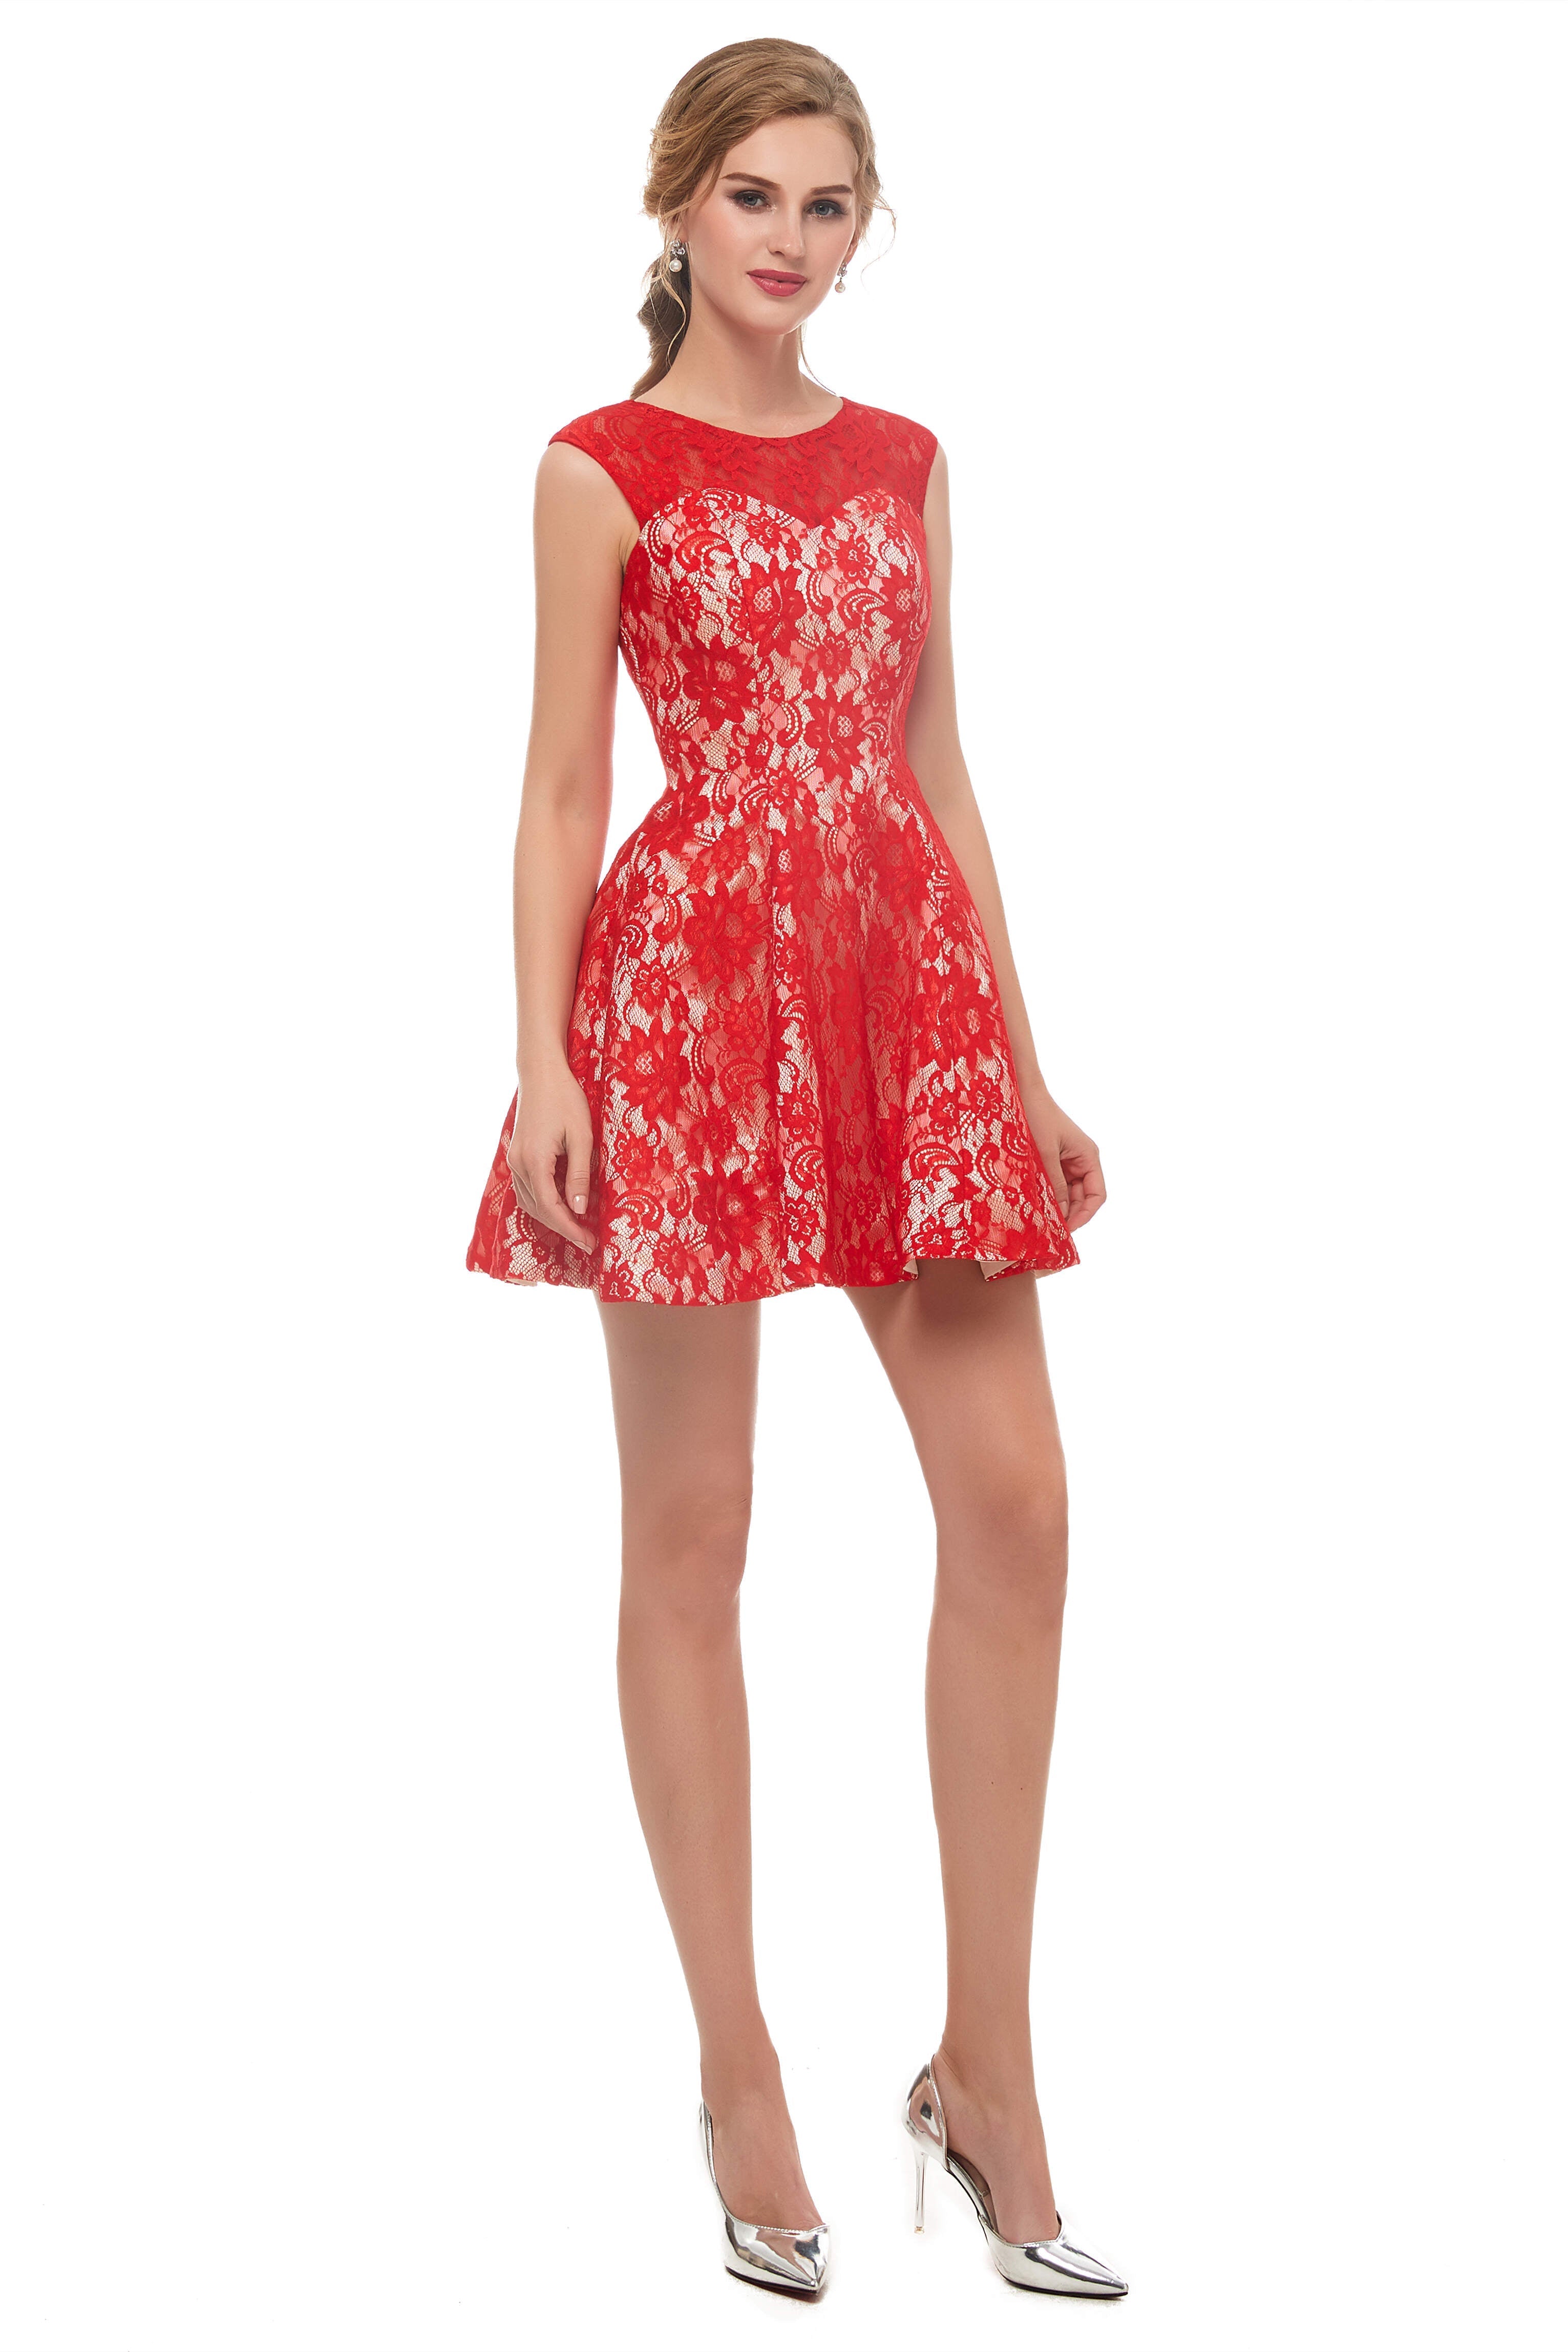 Satin Dress, A-Line Red Lace Sleeveless Mini Homecoming Dresses